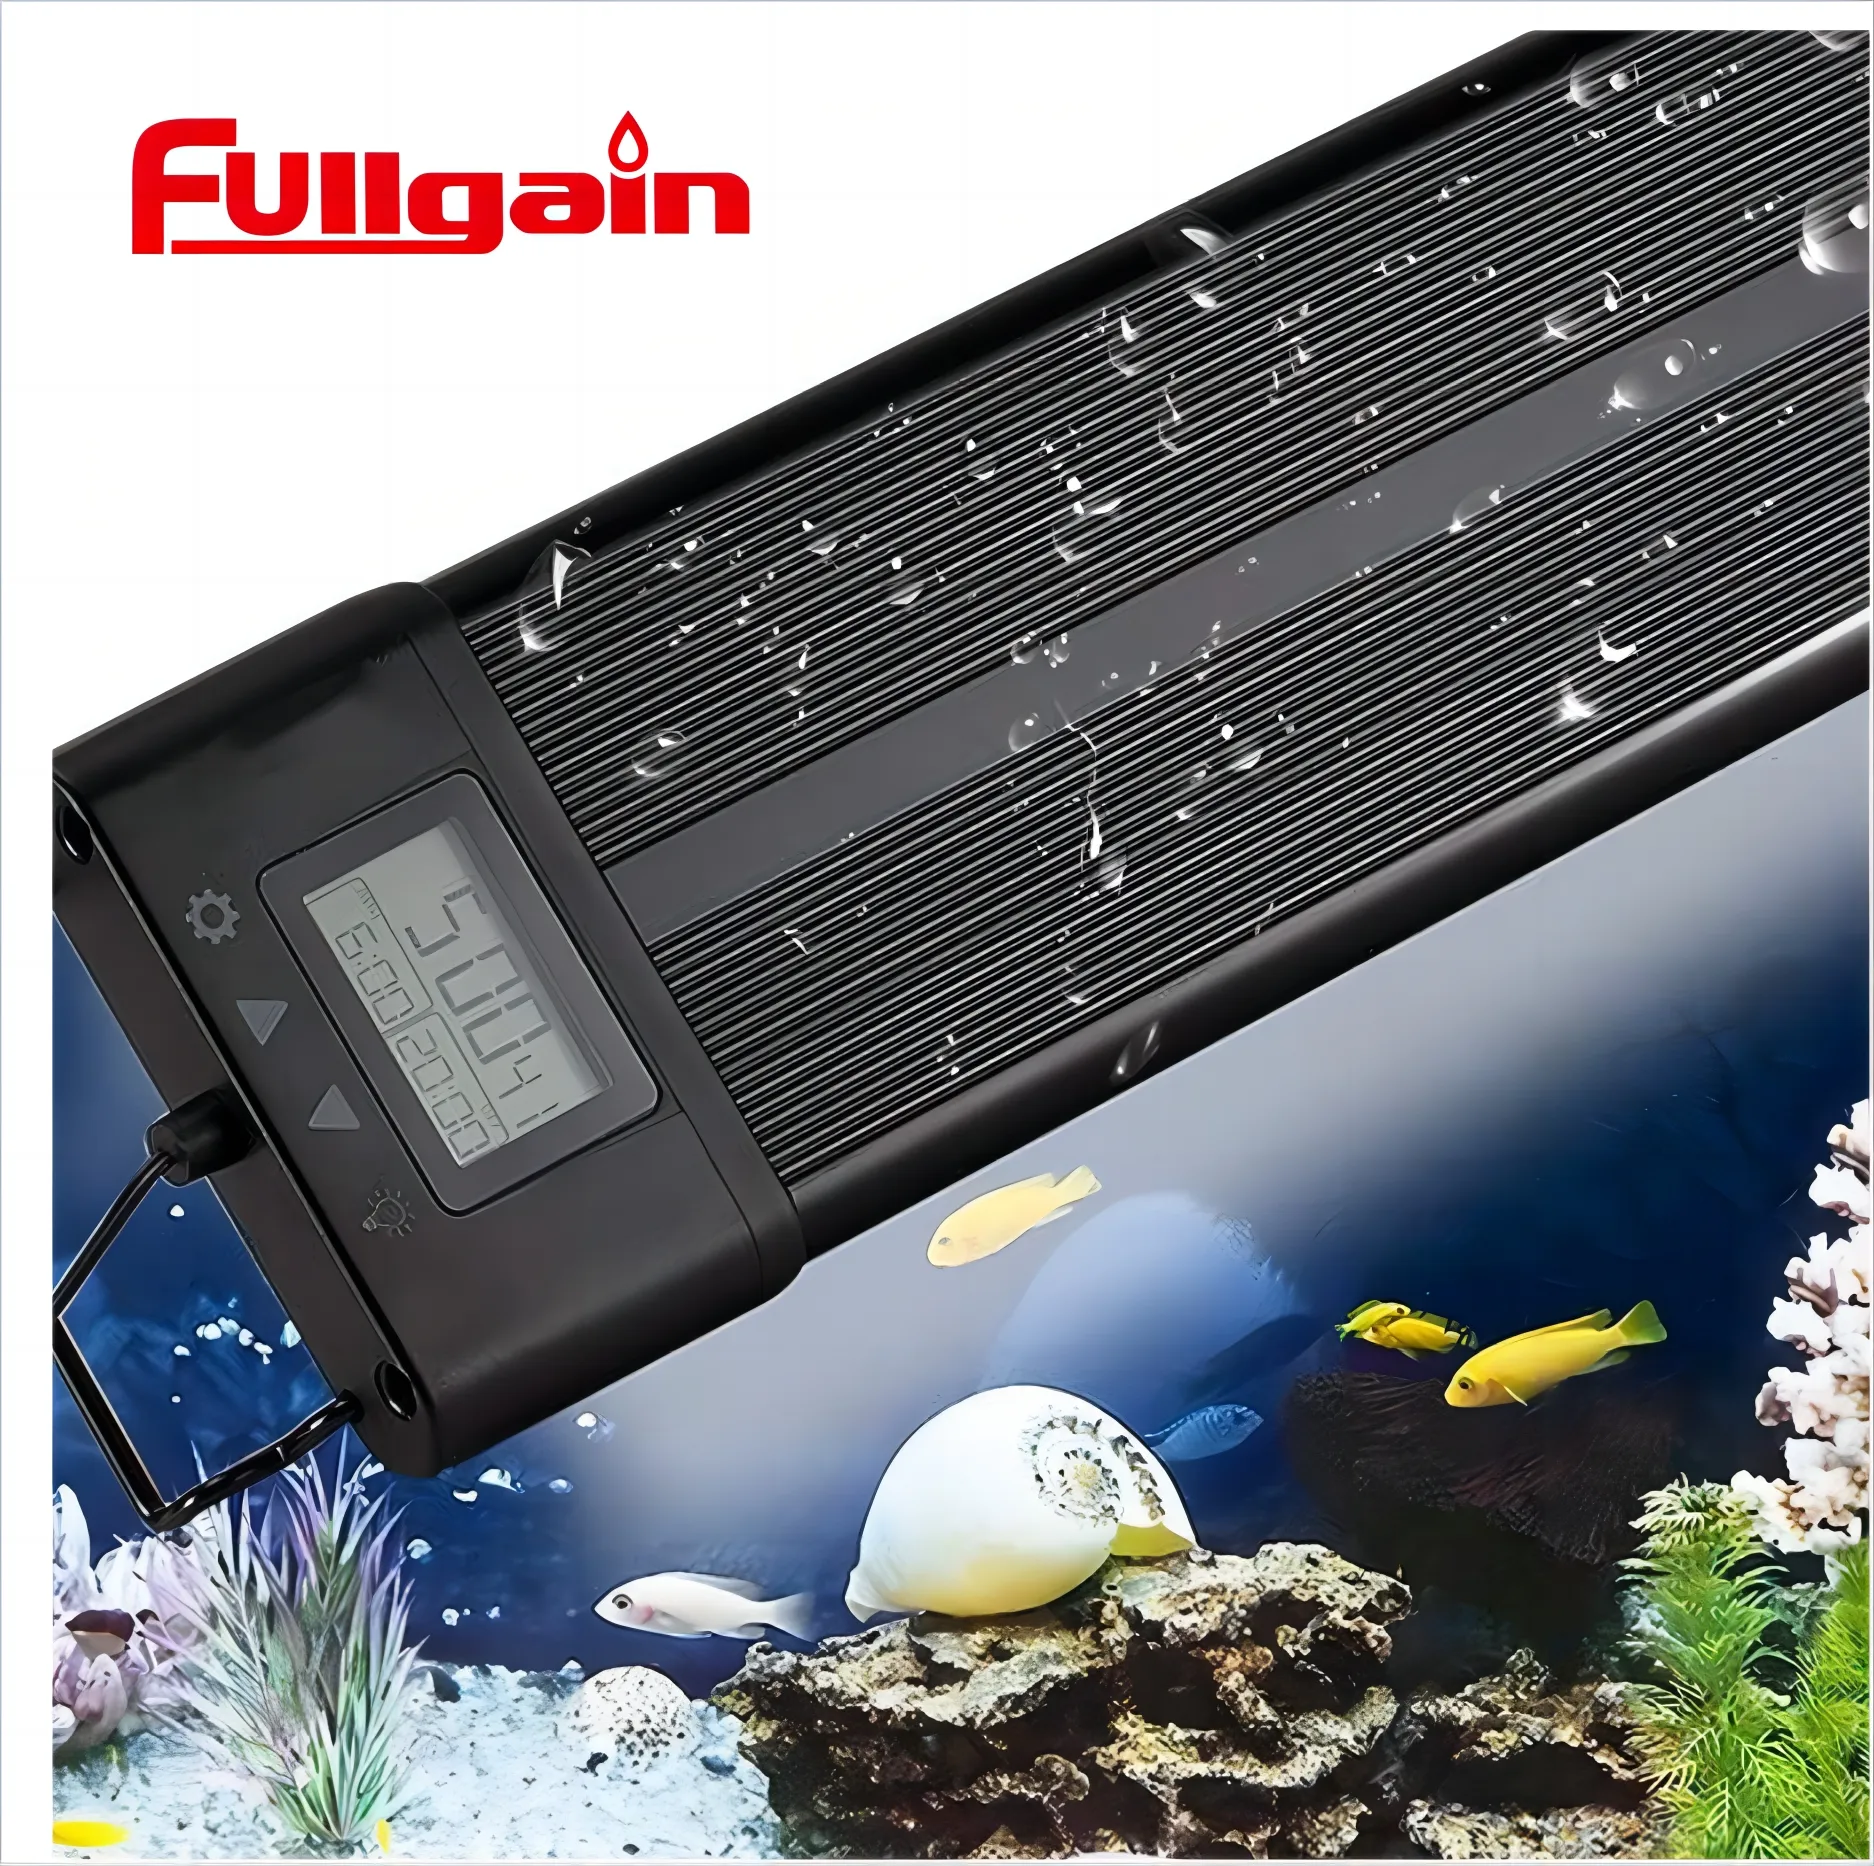 Fullgain Aquarium DIY Mode Programmable Led Light Full Spectrum Plant Fish Tank Light Lcd Display 7 Colors Sunrise Sunset Moon